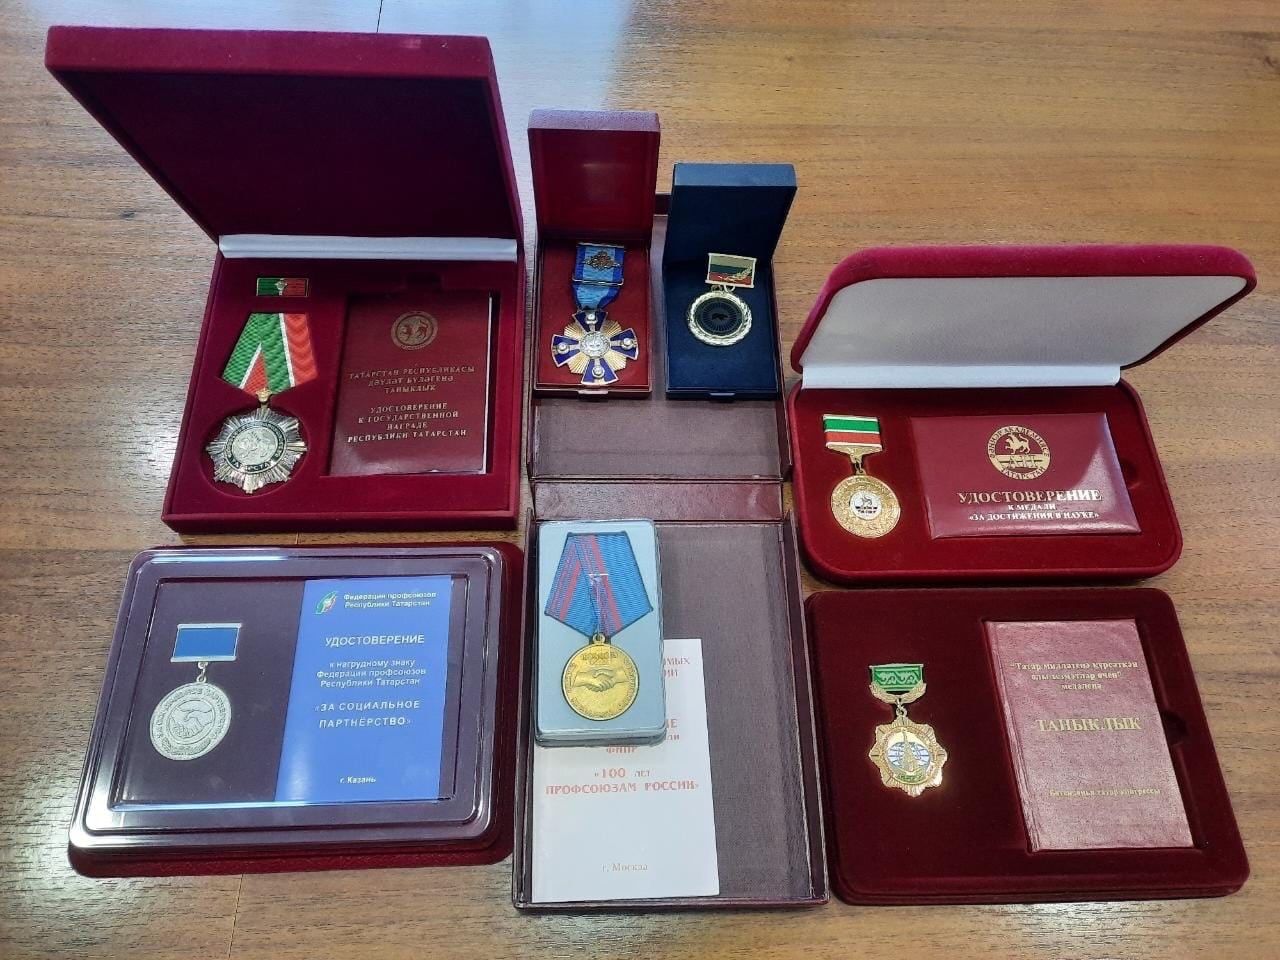 Балтач мәктәбе орден-медальле булды (фото)